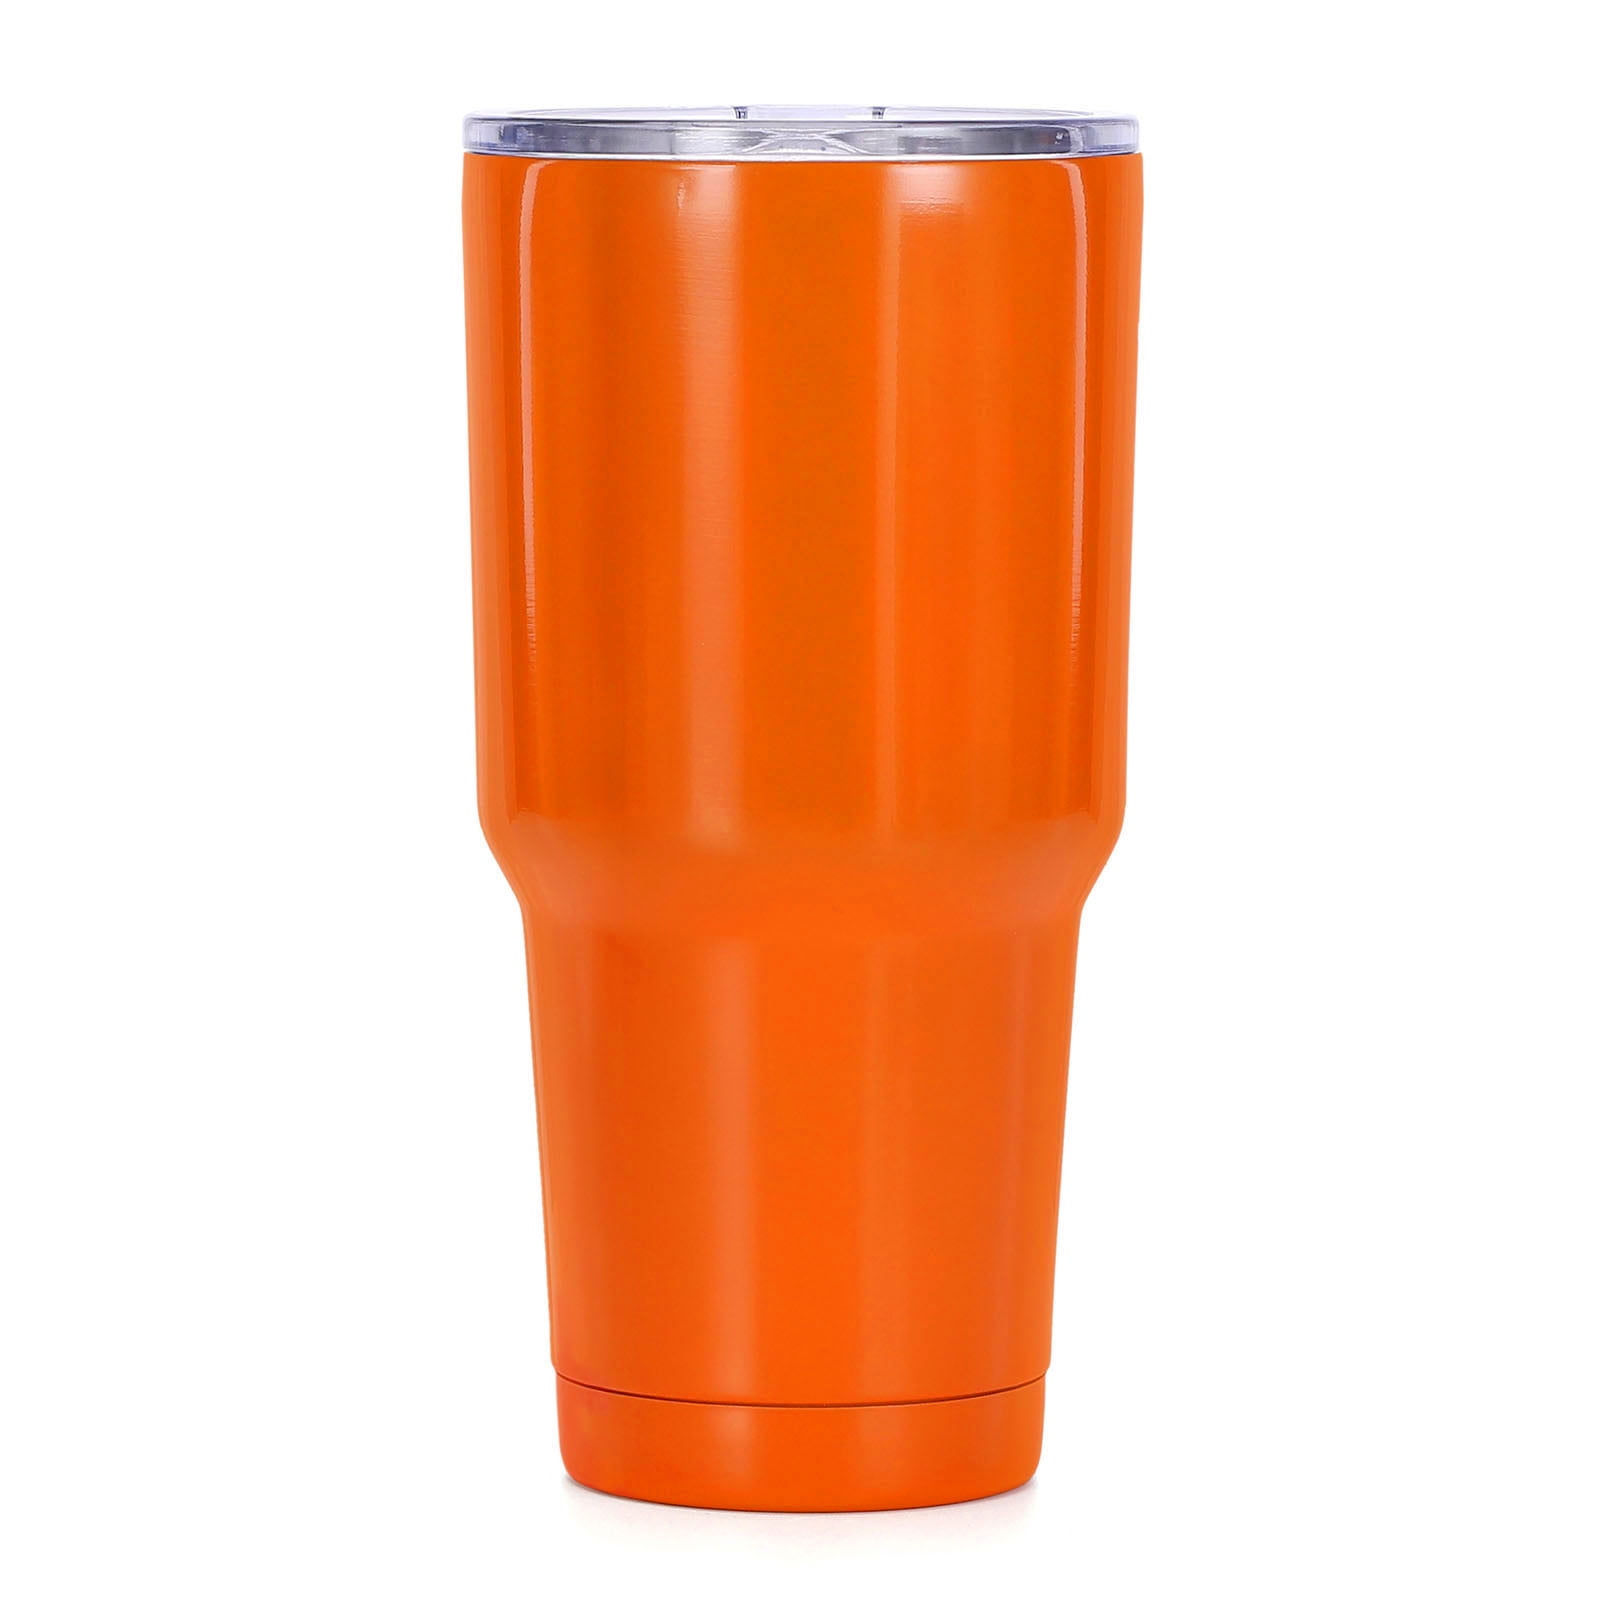 DEER CAMP® Coffee Logo 30 oz. Tumbler With Lid (Orange)